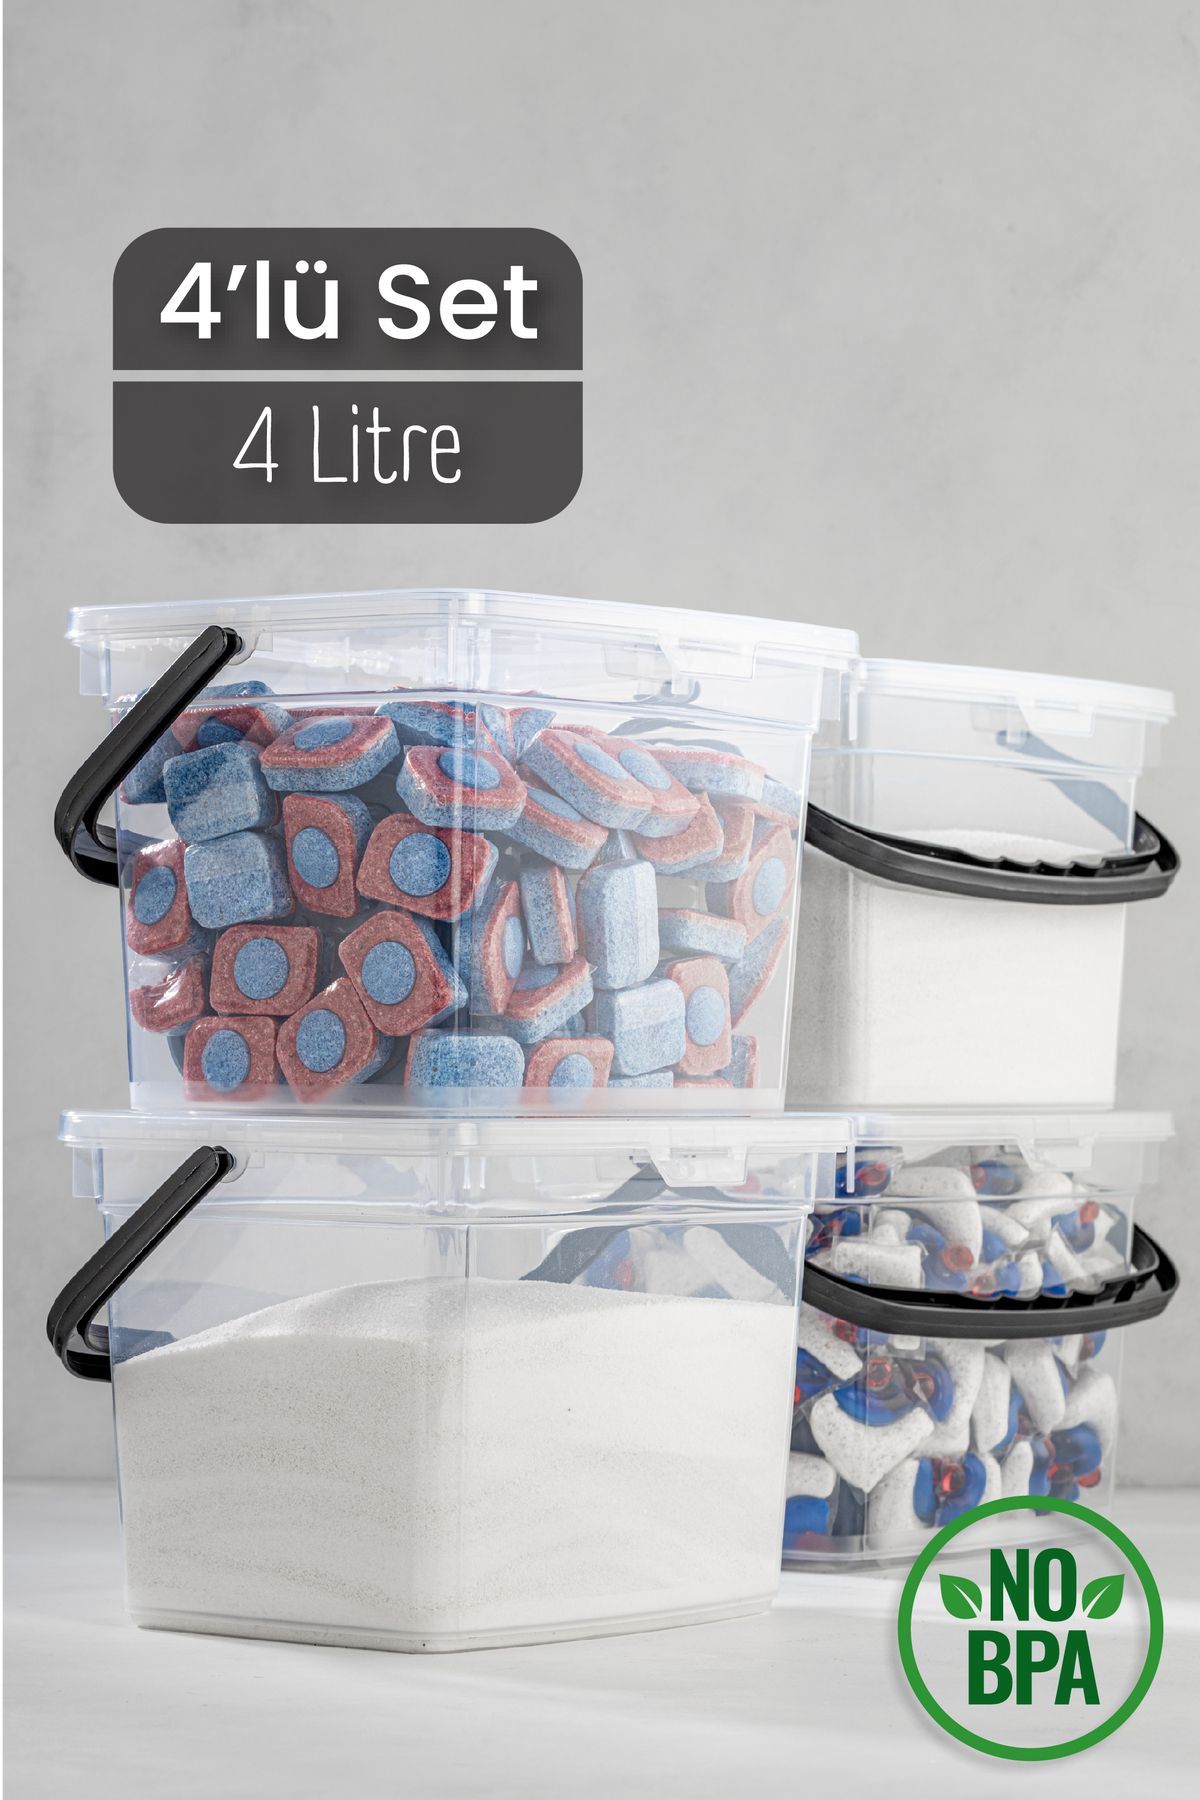 Vienev 4lü 4 Litre Toz Tablet Deterjan Saklama Kabı - Deterjan Kutusu, Toz Tablet Deterjan Kabı Beyaz